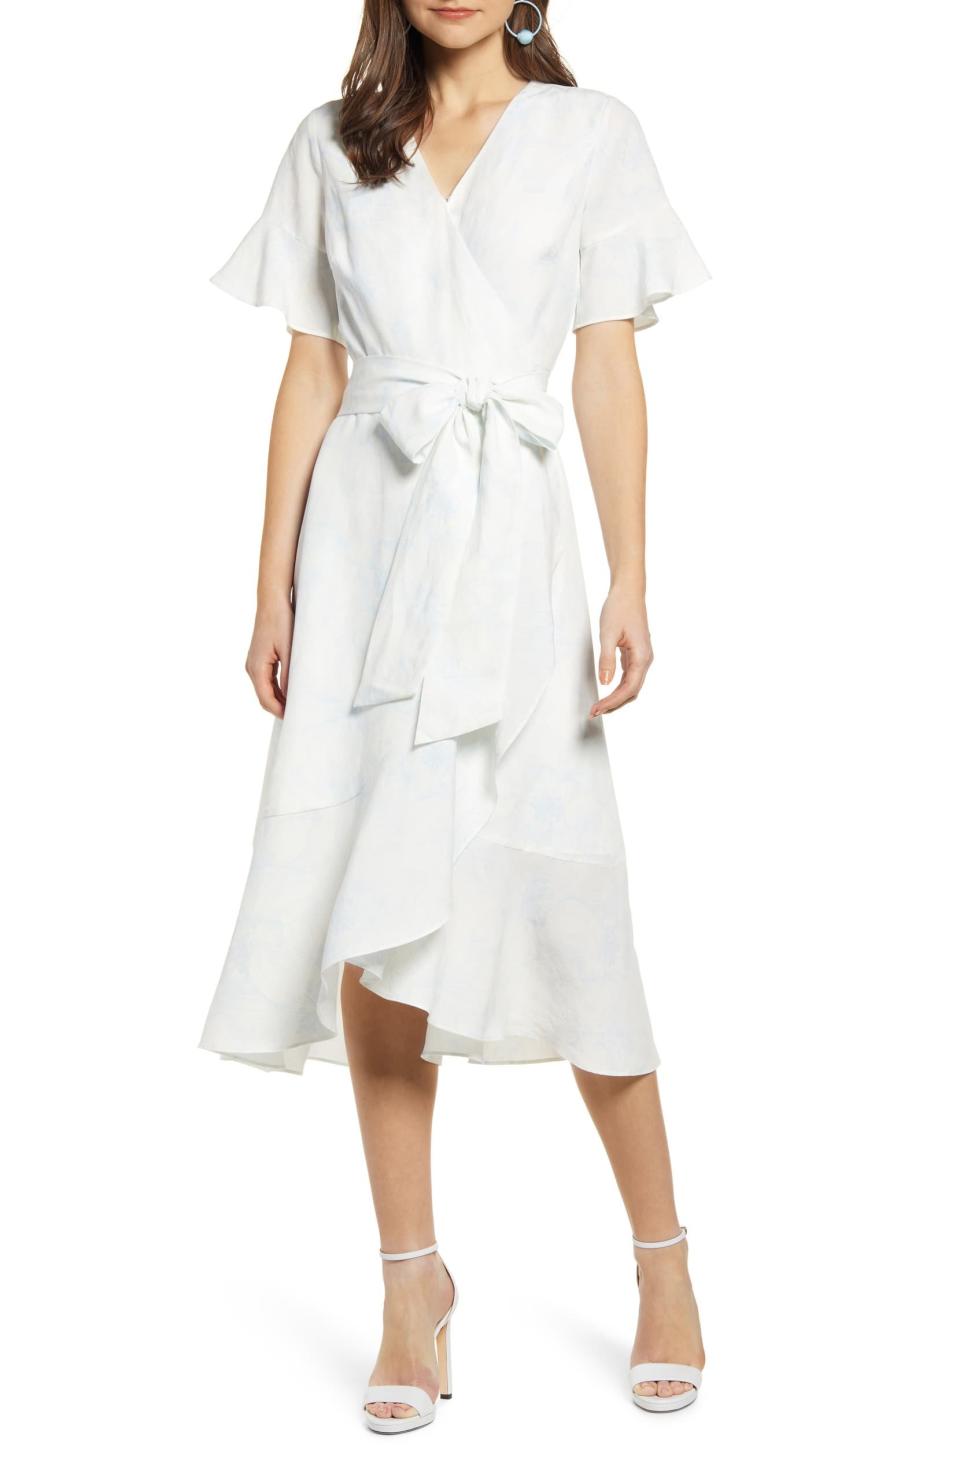 <b>Buy It! </b>Rachel Parcell Ruffle Wrap Dress, $159; <a href="https://click.linksynergy.com/deeplink?id=93xLBvPhAeE&mid=1237&murl=https%3A%2F%2Fshop.nordstrom.com%2Fs%2Frachel-parcell-ruffle-wrap-dress-nordstrom-exclusive%2F5162308&u1=PEO%2CShopping%3A15GorgeousWrapDressestoShopThisSummer%2CInspiredbyMeghanMarkleandMoreCelebs%2Crcarhart31%2CUnc%2CGal%2C7085788%2C201905%2CI" rel="nofollow noopener" target="_blank" data-ylk="slk:nordstrom.com;elm:context_link;itc:0;sec:content-canvas" class="link ">nordstrom.com</a>